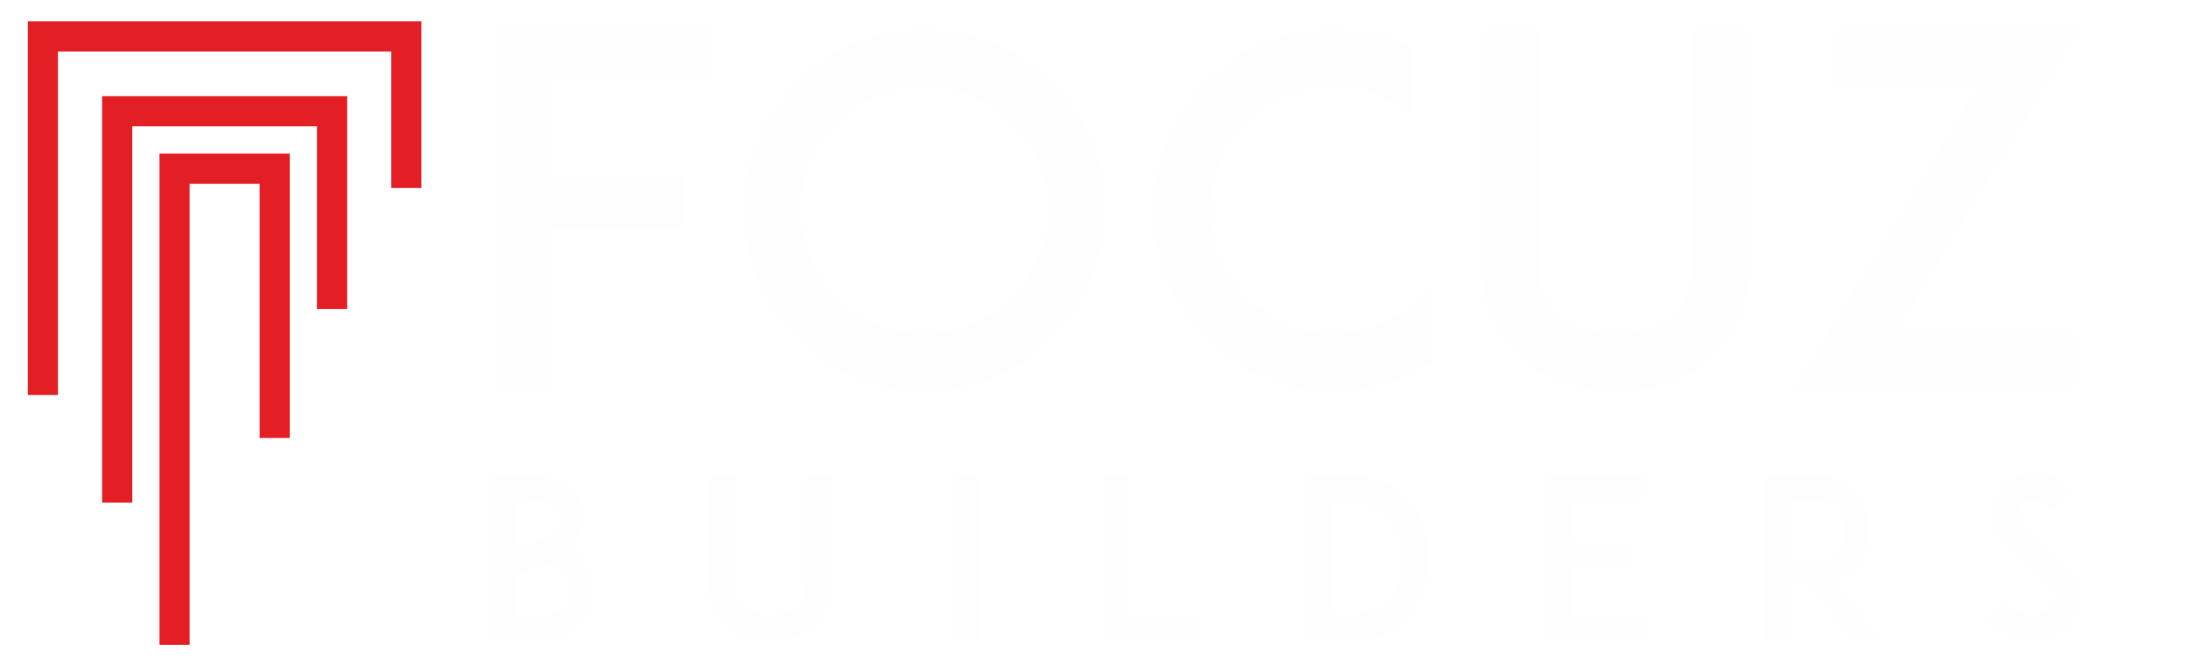 Focuz Builders